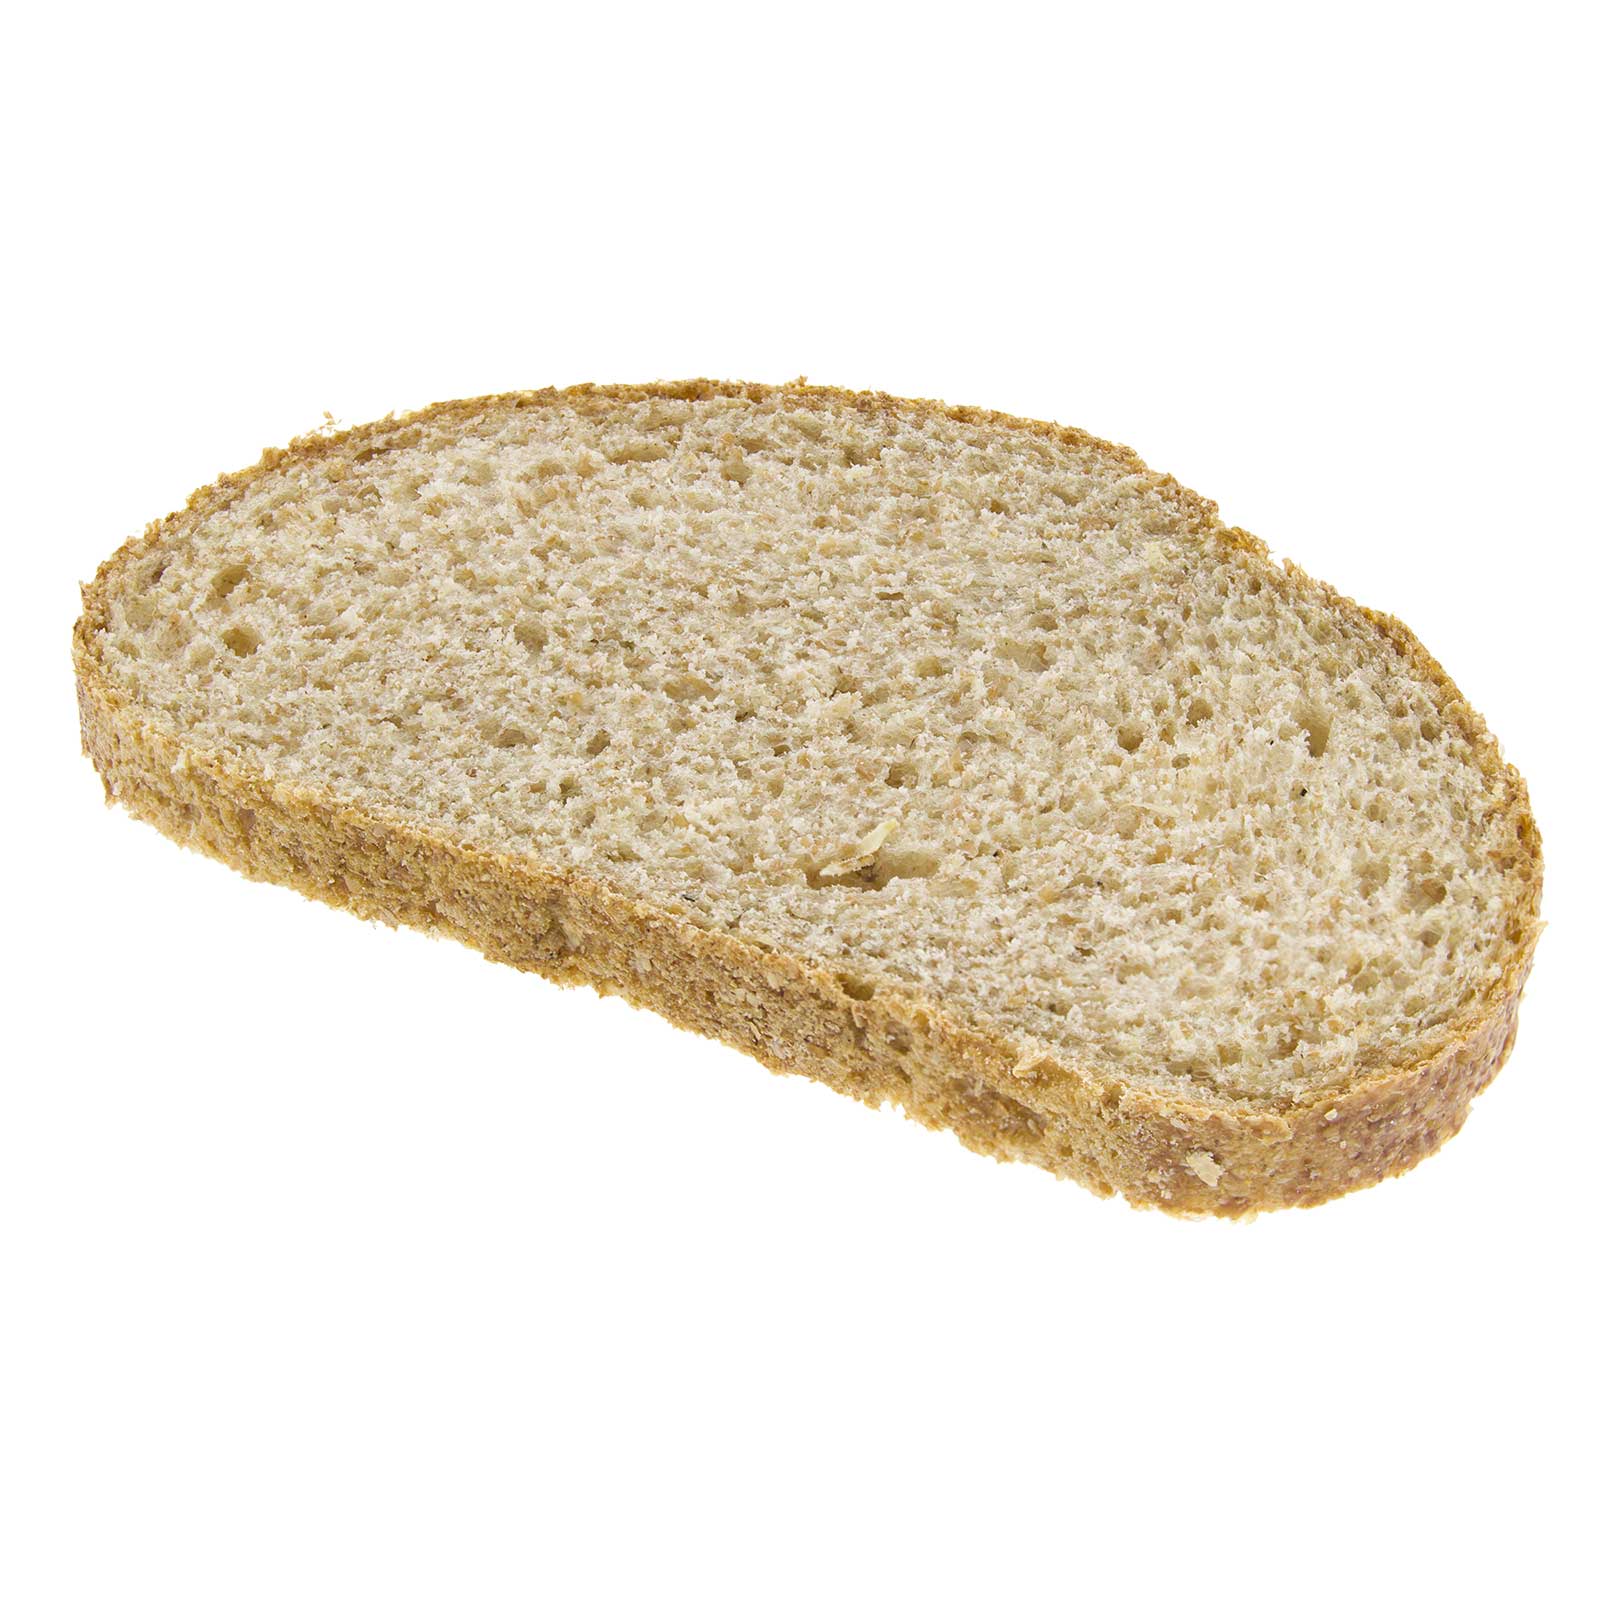 Bread loaf of ecological integral spell 350g (uncut)